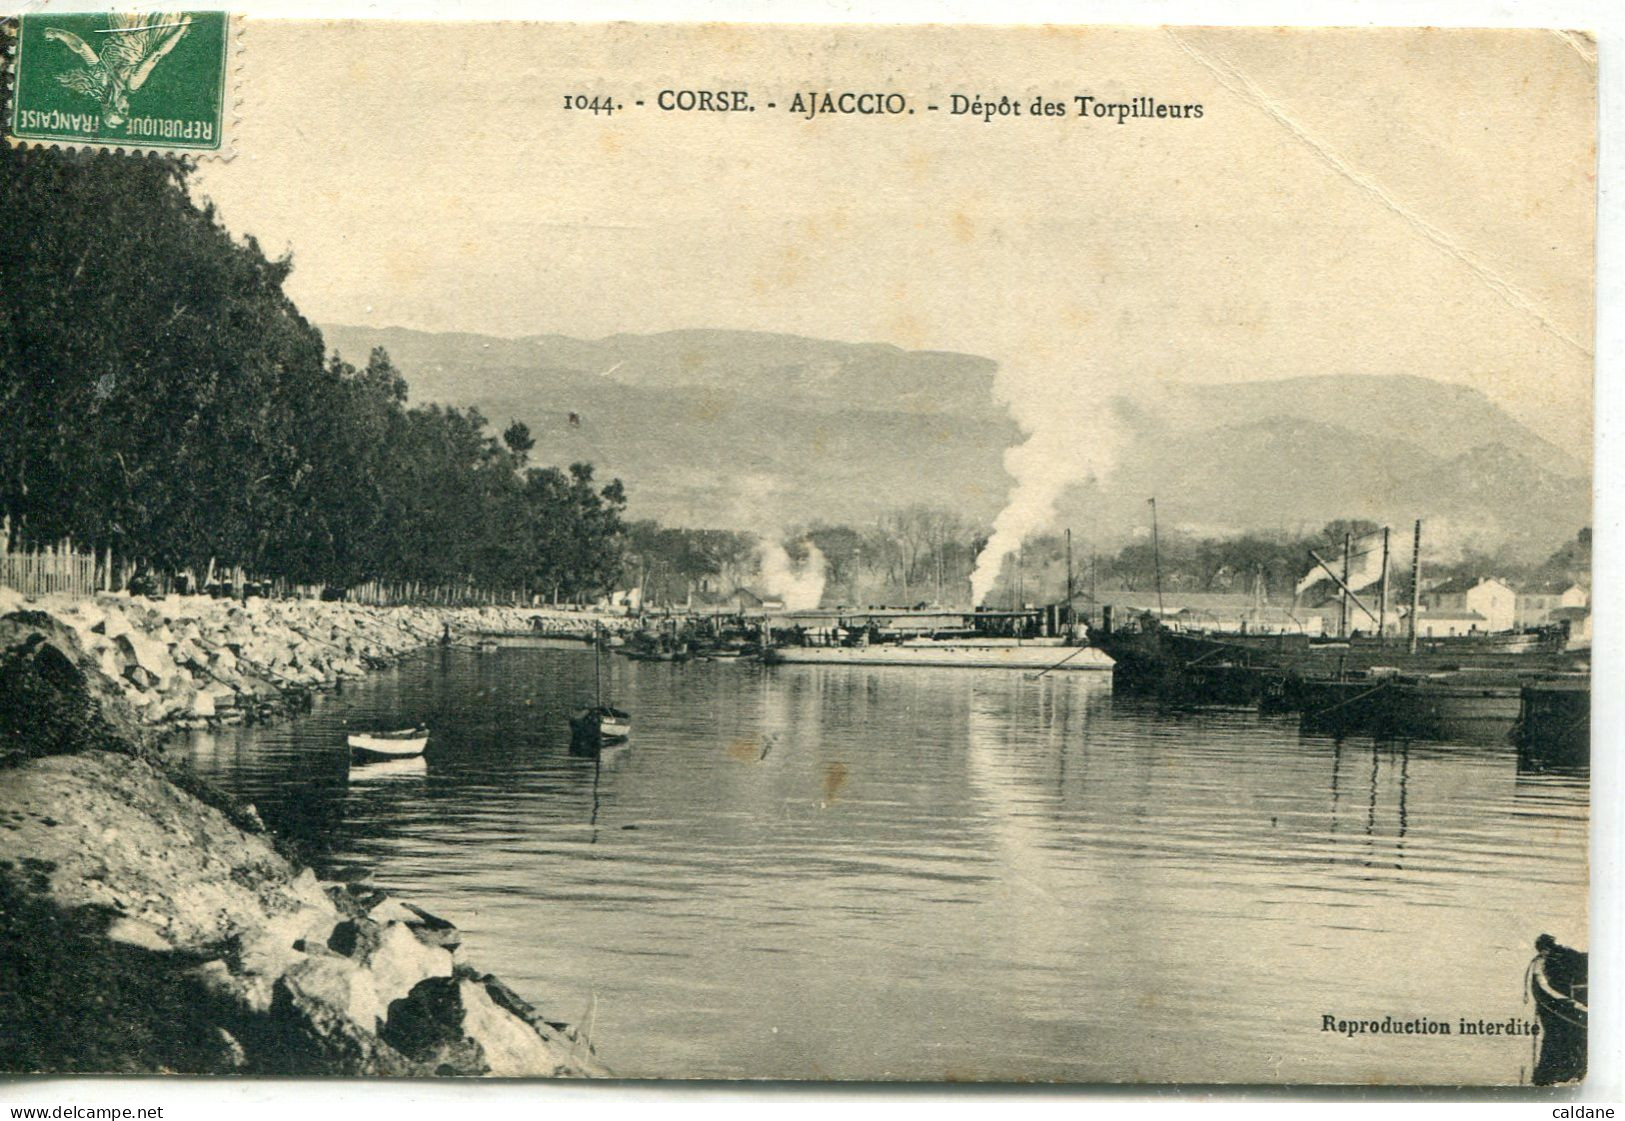 -2A- CORSE - AJACCIO - Depot Des Torpillleurs.      Colection J.Moretti,Corté. N°:1044 - Ajaccio